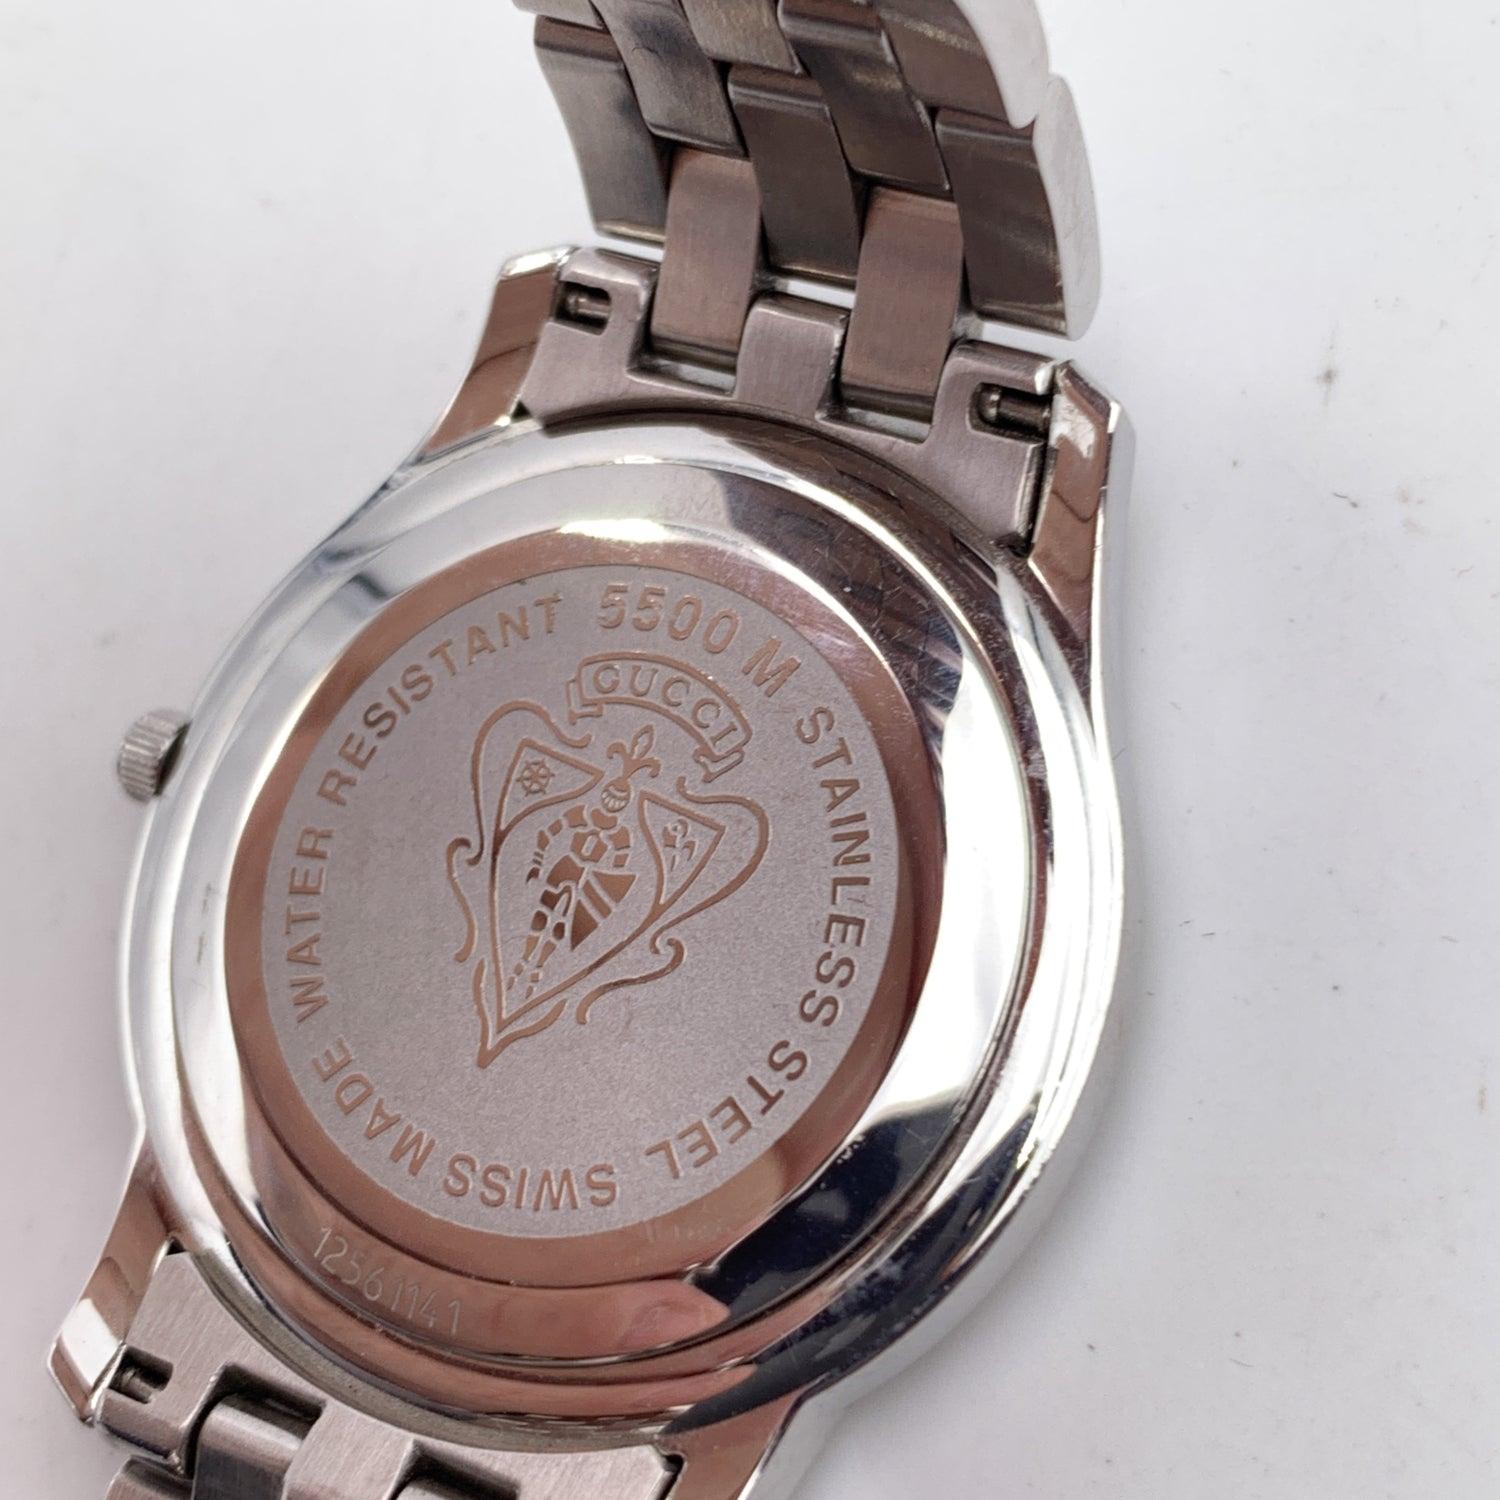 Gucci Silver Stainless Steel Mod 5500 M Quartz Wrist Watch Black 1